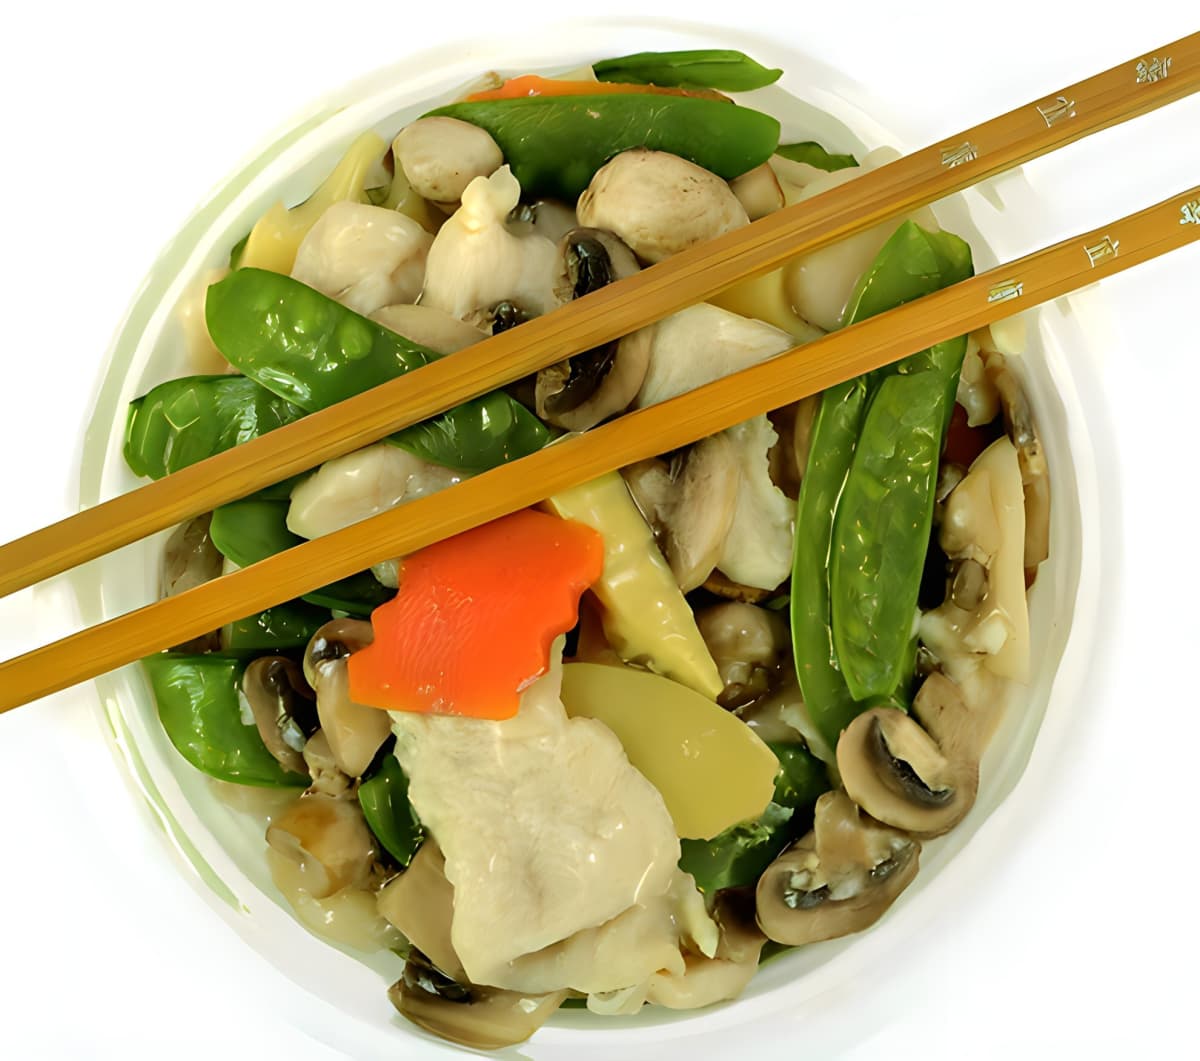 Moo goo gai pan with chopsticks